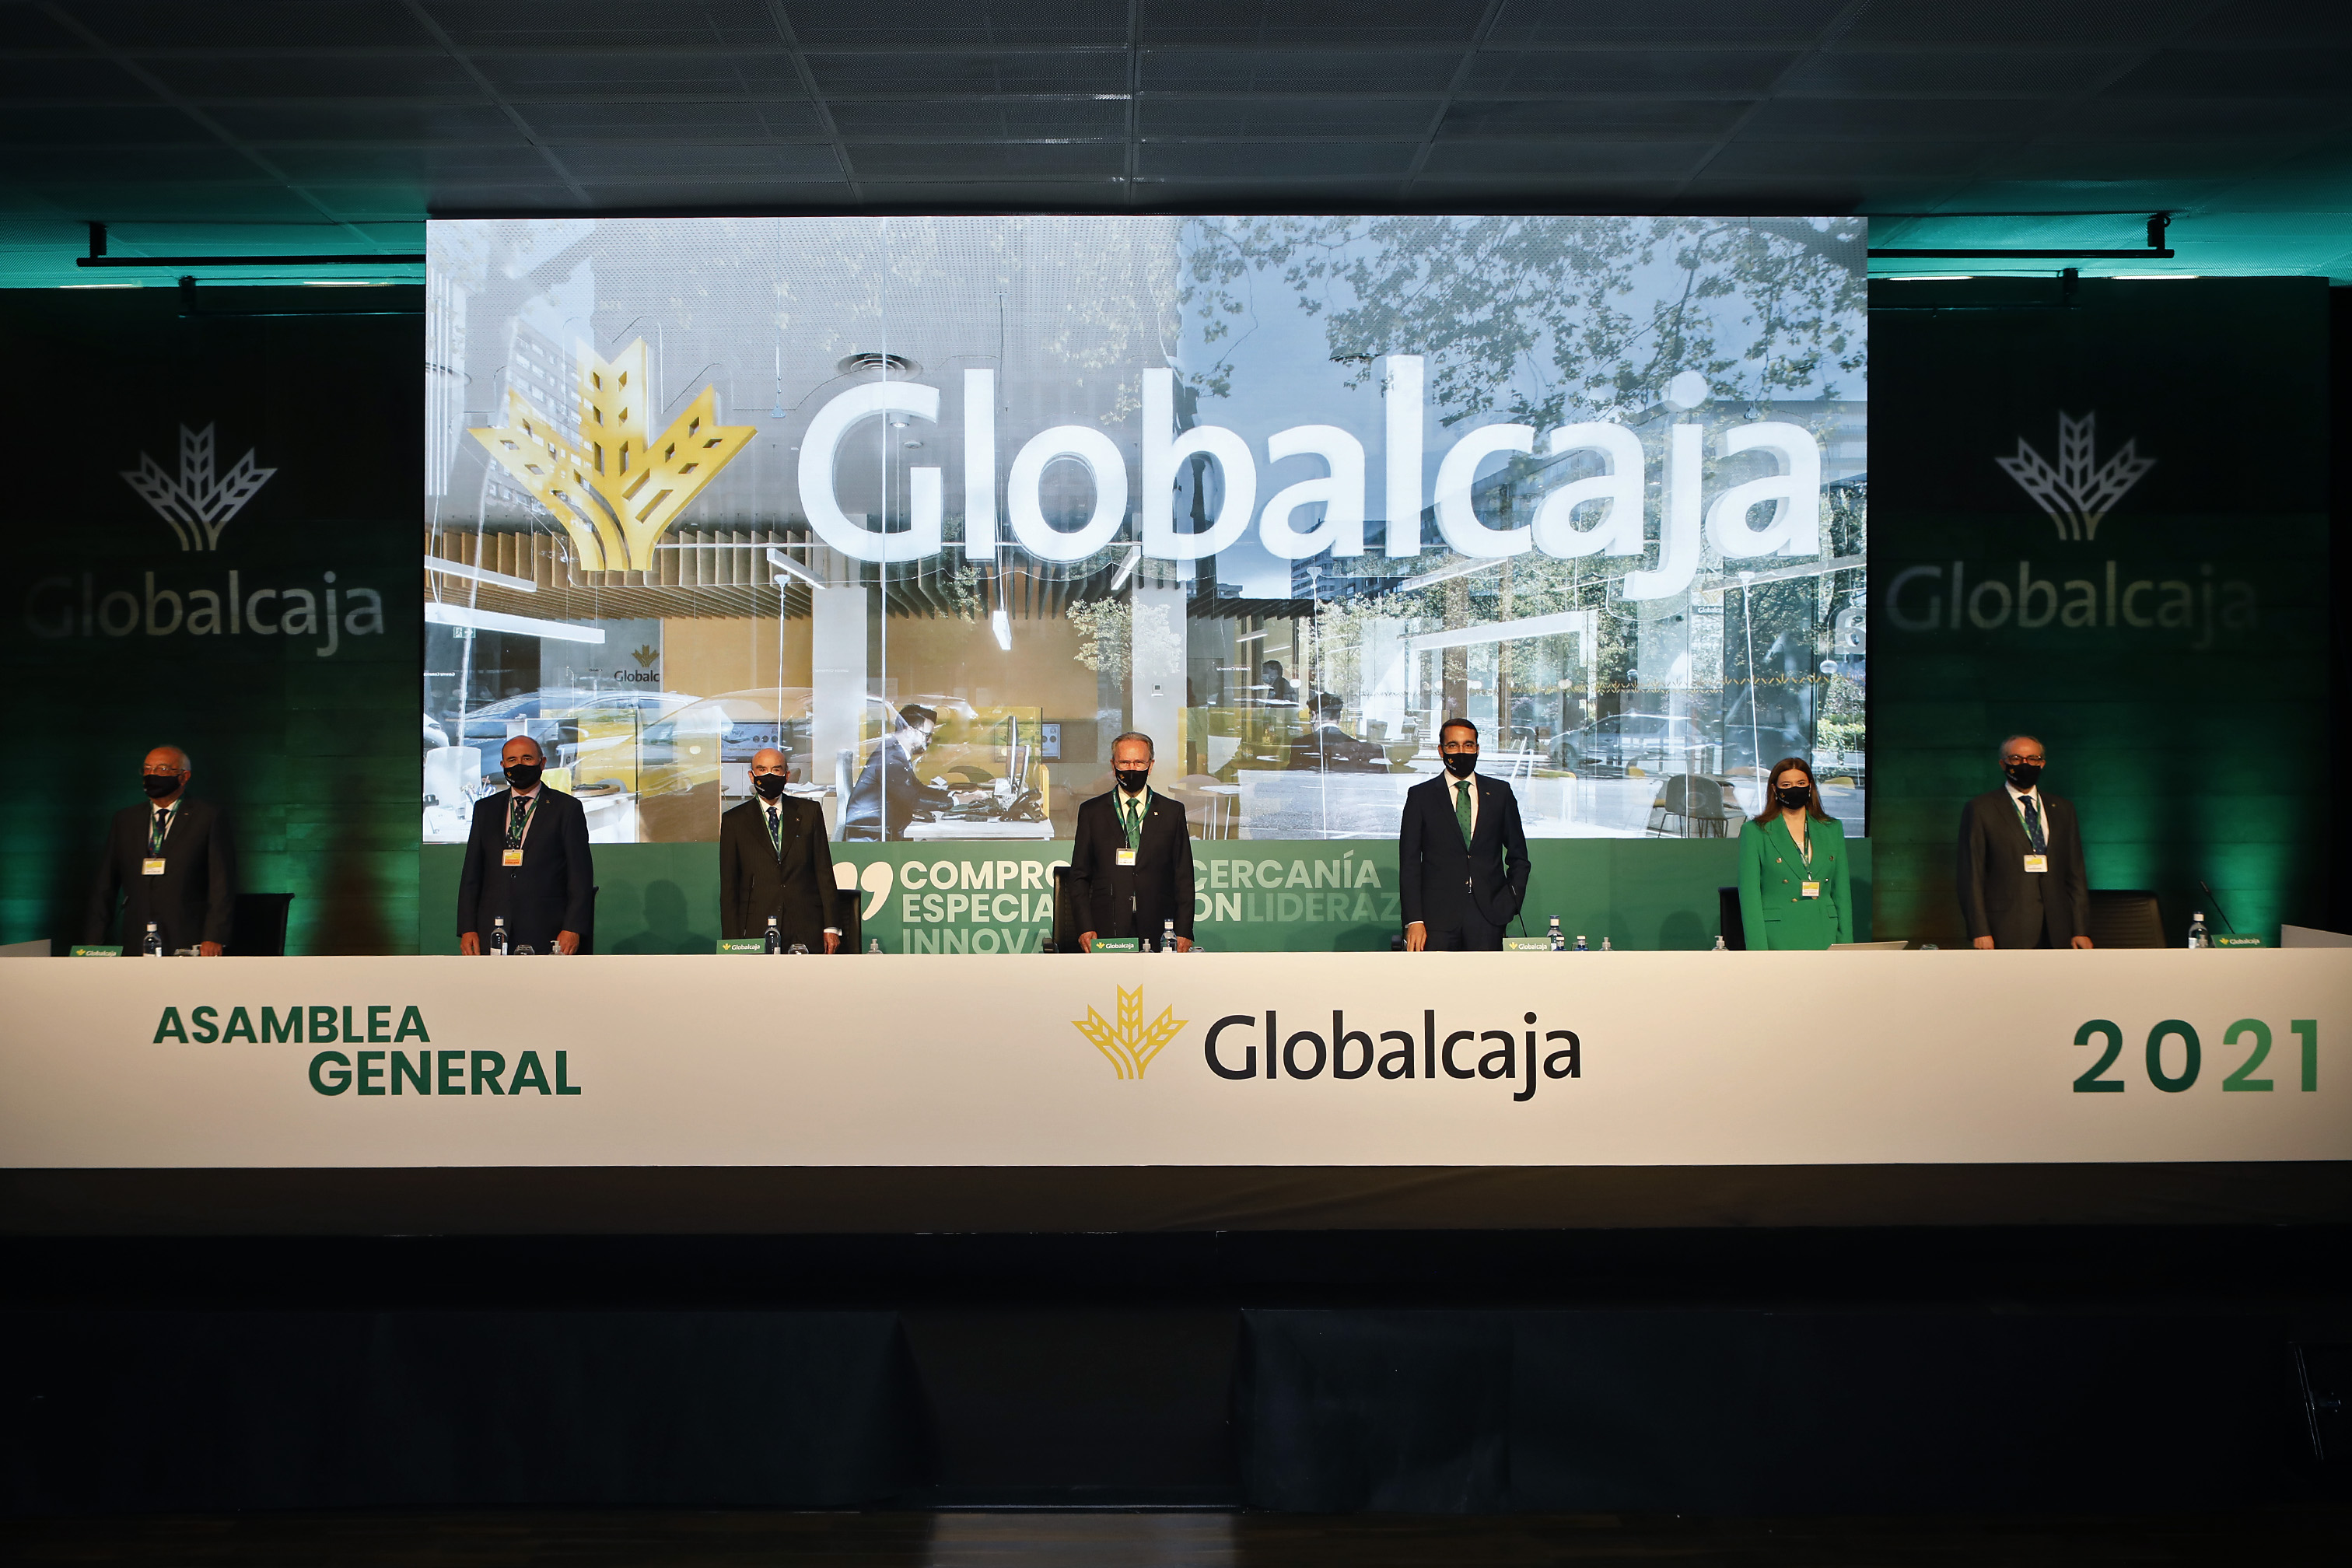 Asamblea General Globalcaja